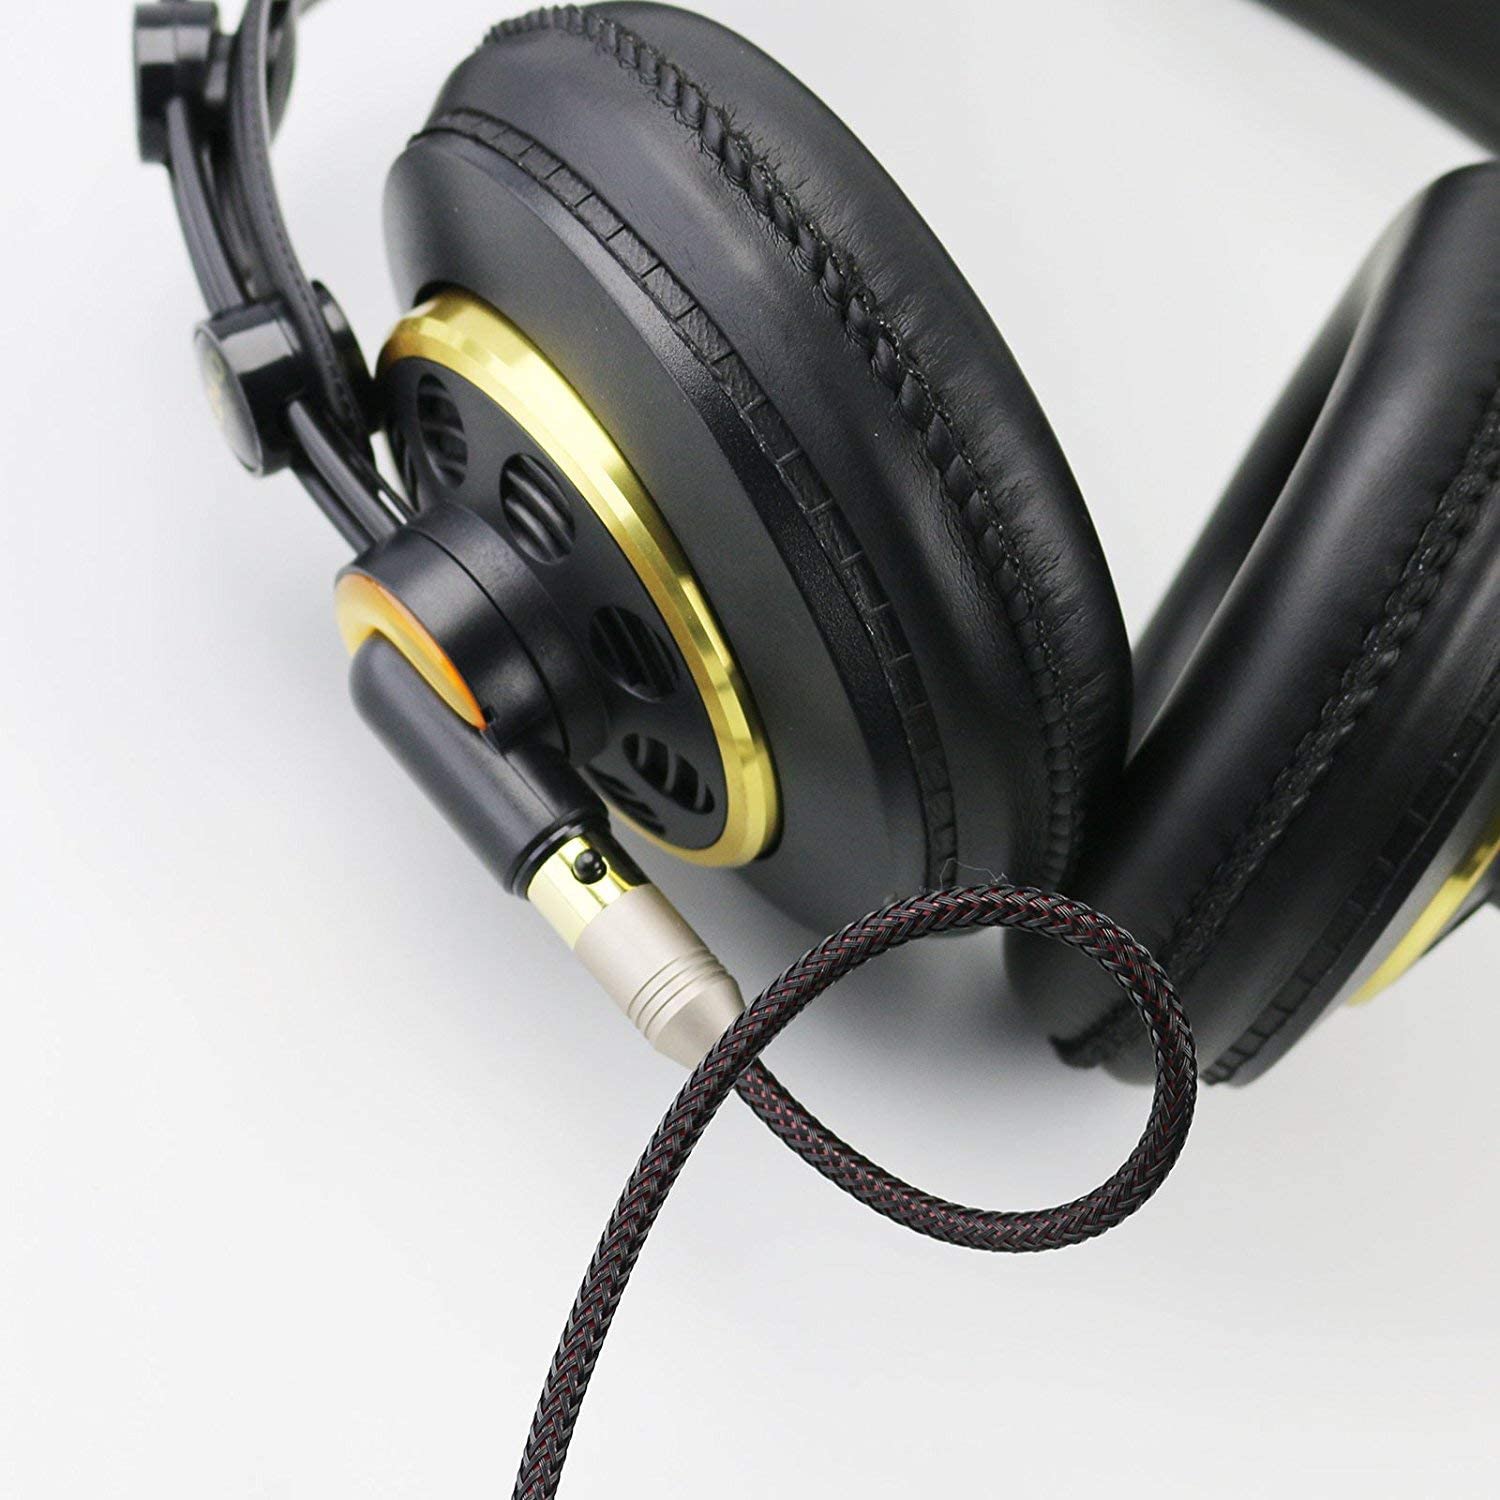 Aquelo Q701 Replacement Audio Cord Mini XLR 3Pin to 3.5mm Cable Compatible AKG Q701 K702 K712 K7XX K241S MK2 K240 K245 K275 K371BT M220 K141 K171 K175 K181 K182 Headphones (L-Shape), Black, 120cm/4ft